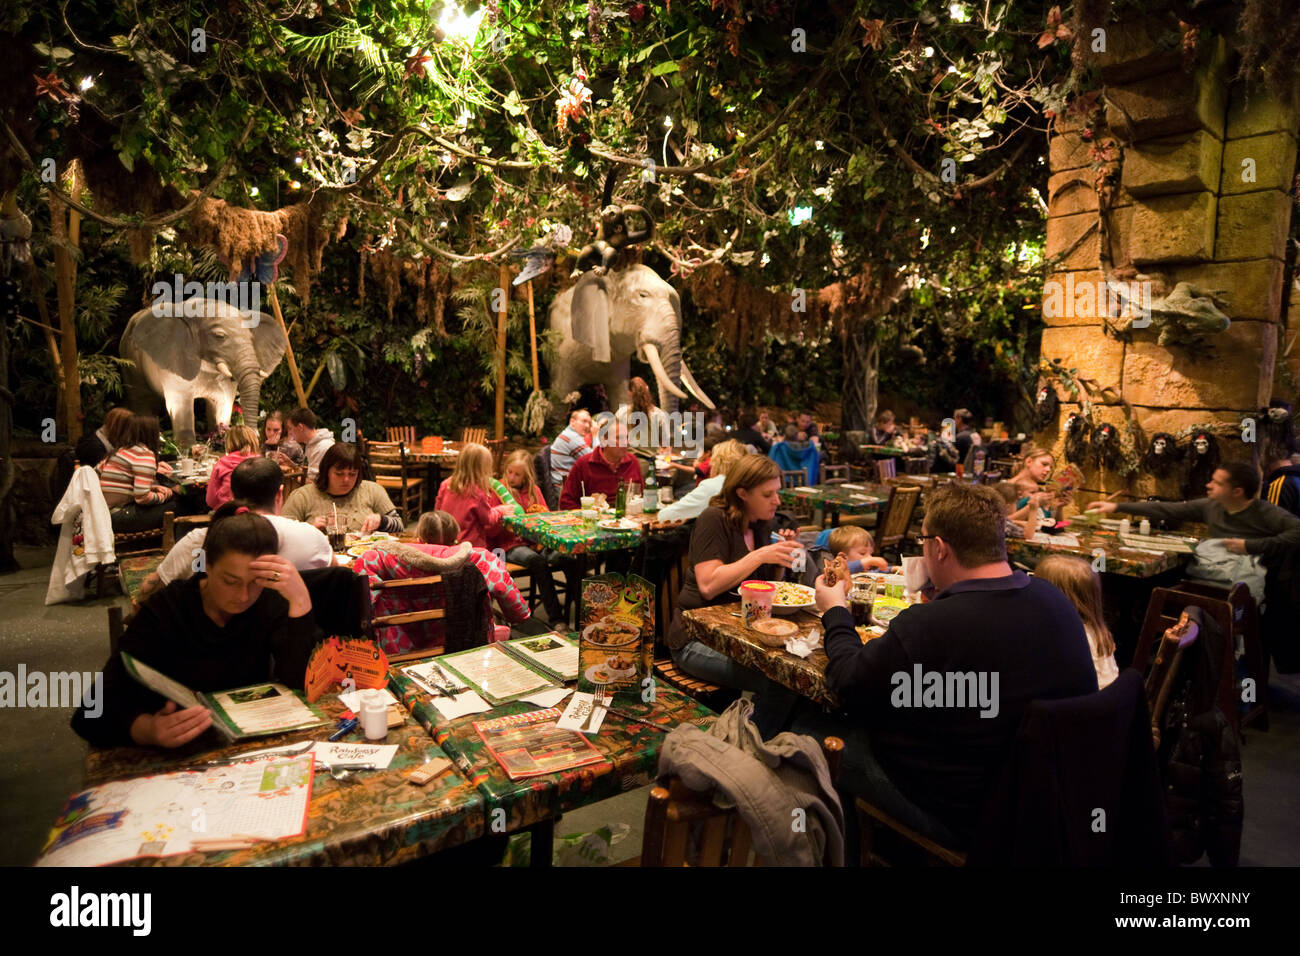 People eating in the Rainforest cafe, Disney Village, Disneyland Paris